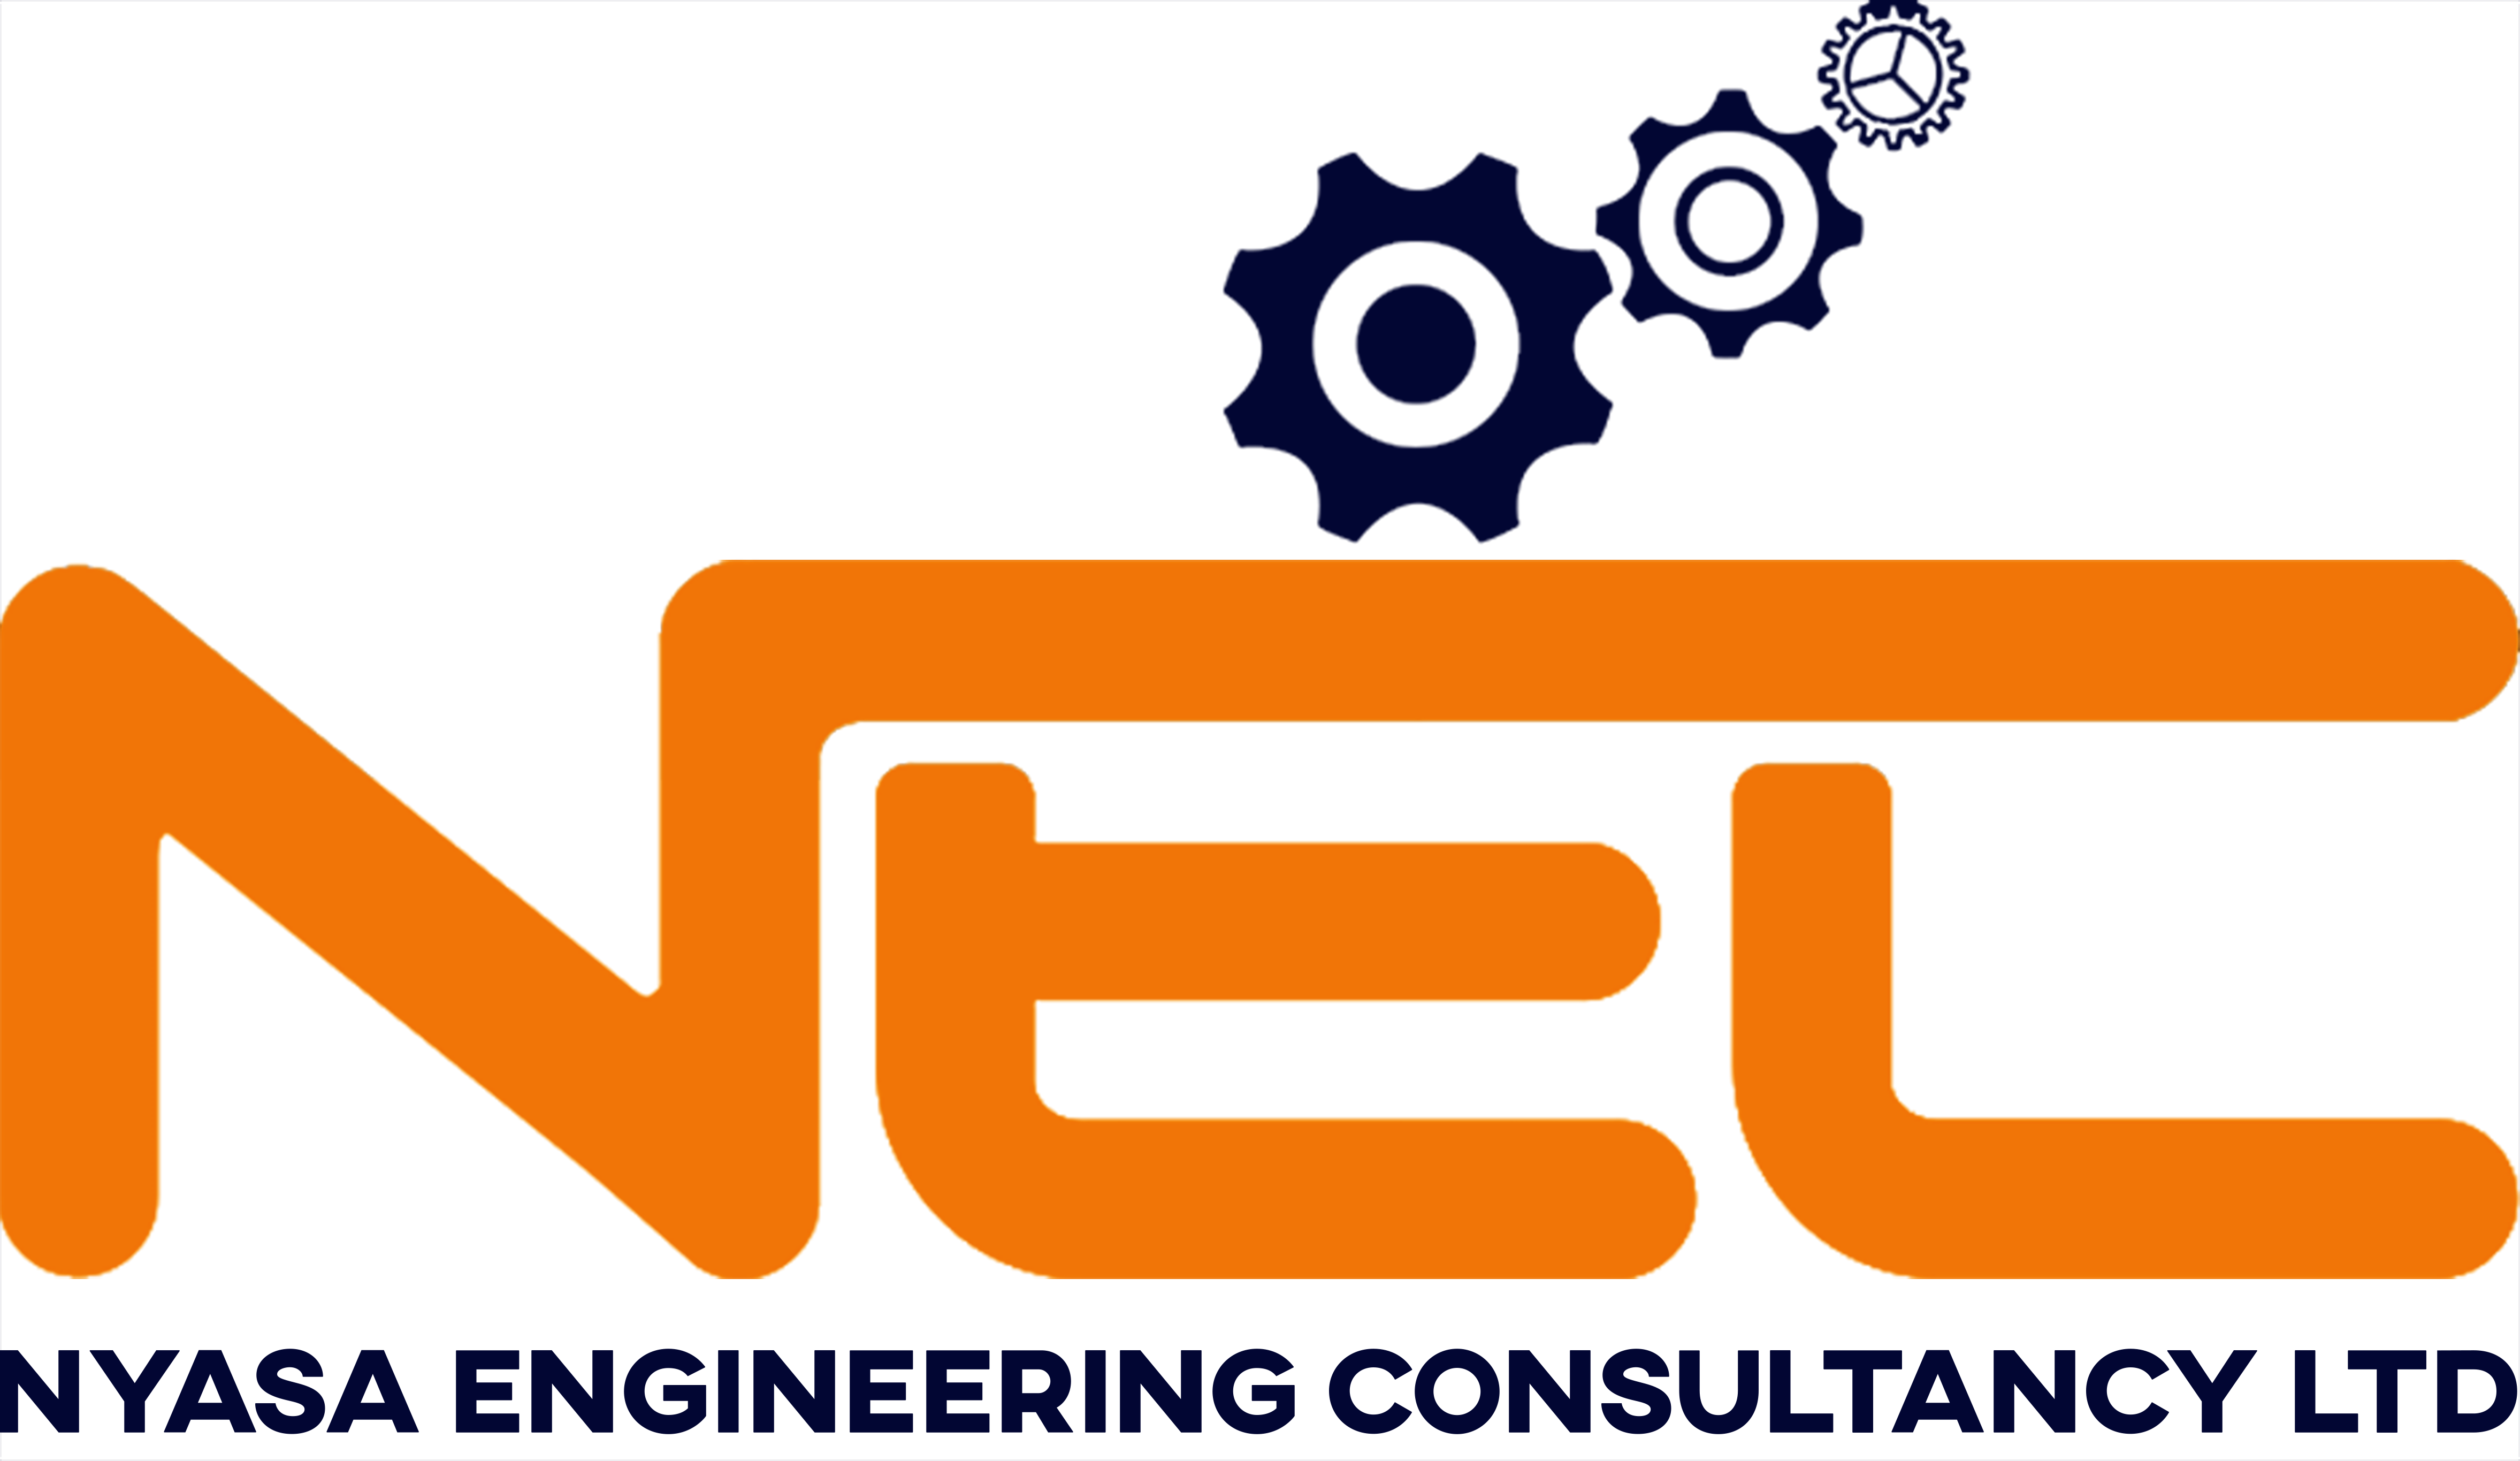 Nyasa Engineering Consultancy